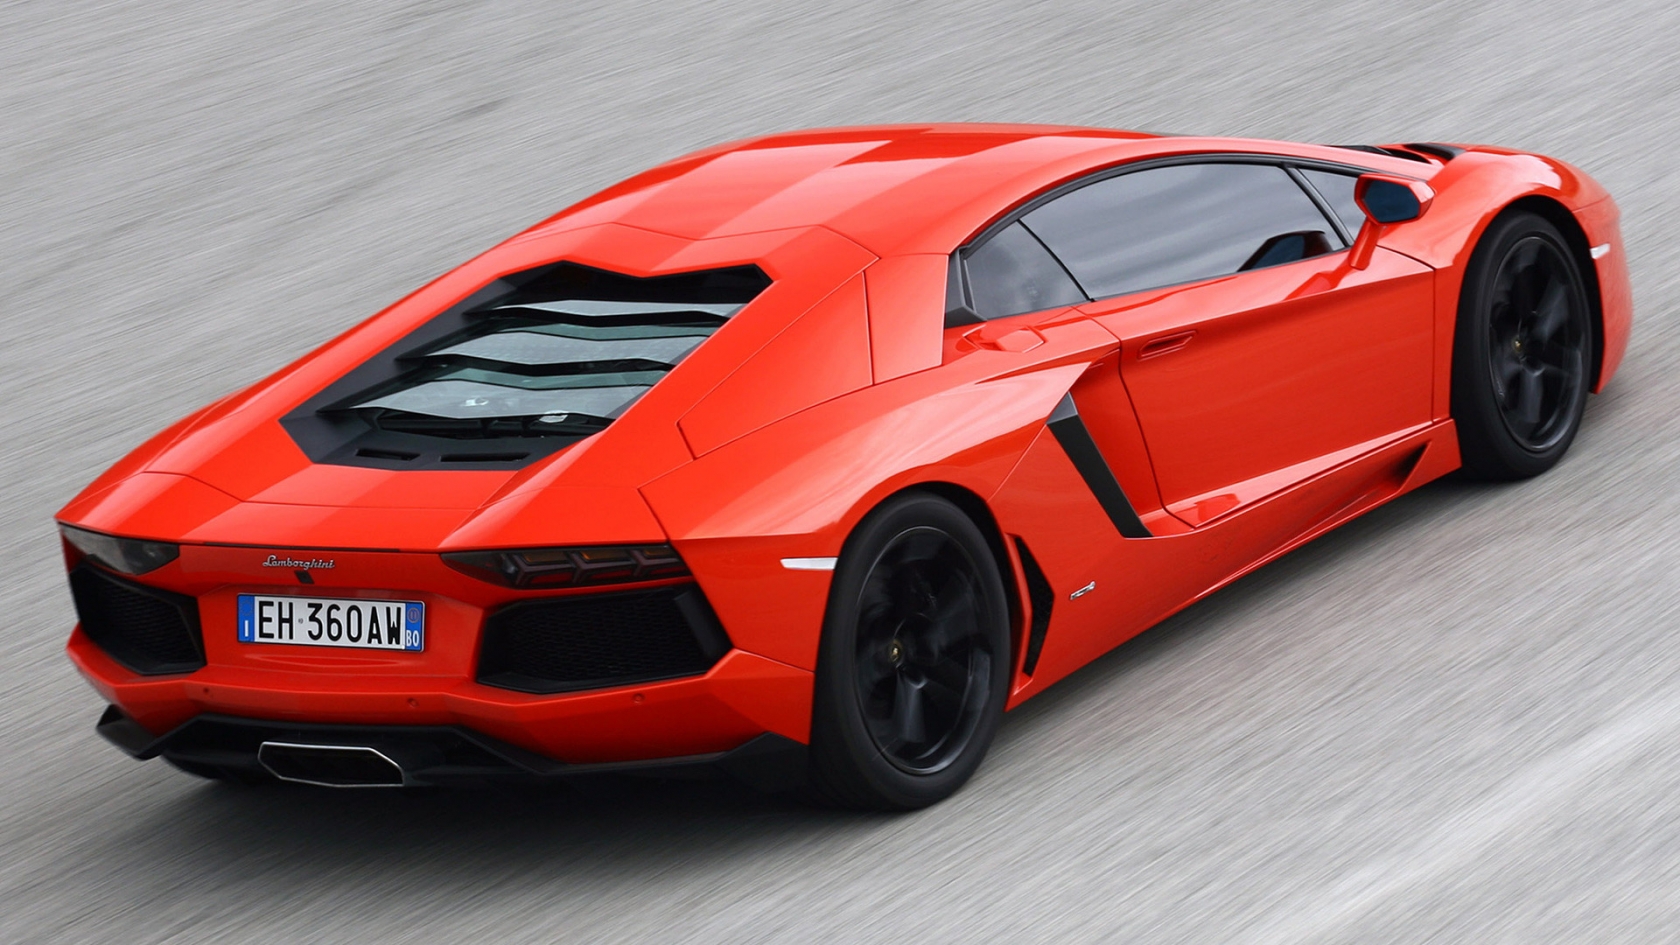 Lamborghini Aventador Top Rear for 1680 x 945 HDTV resolution